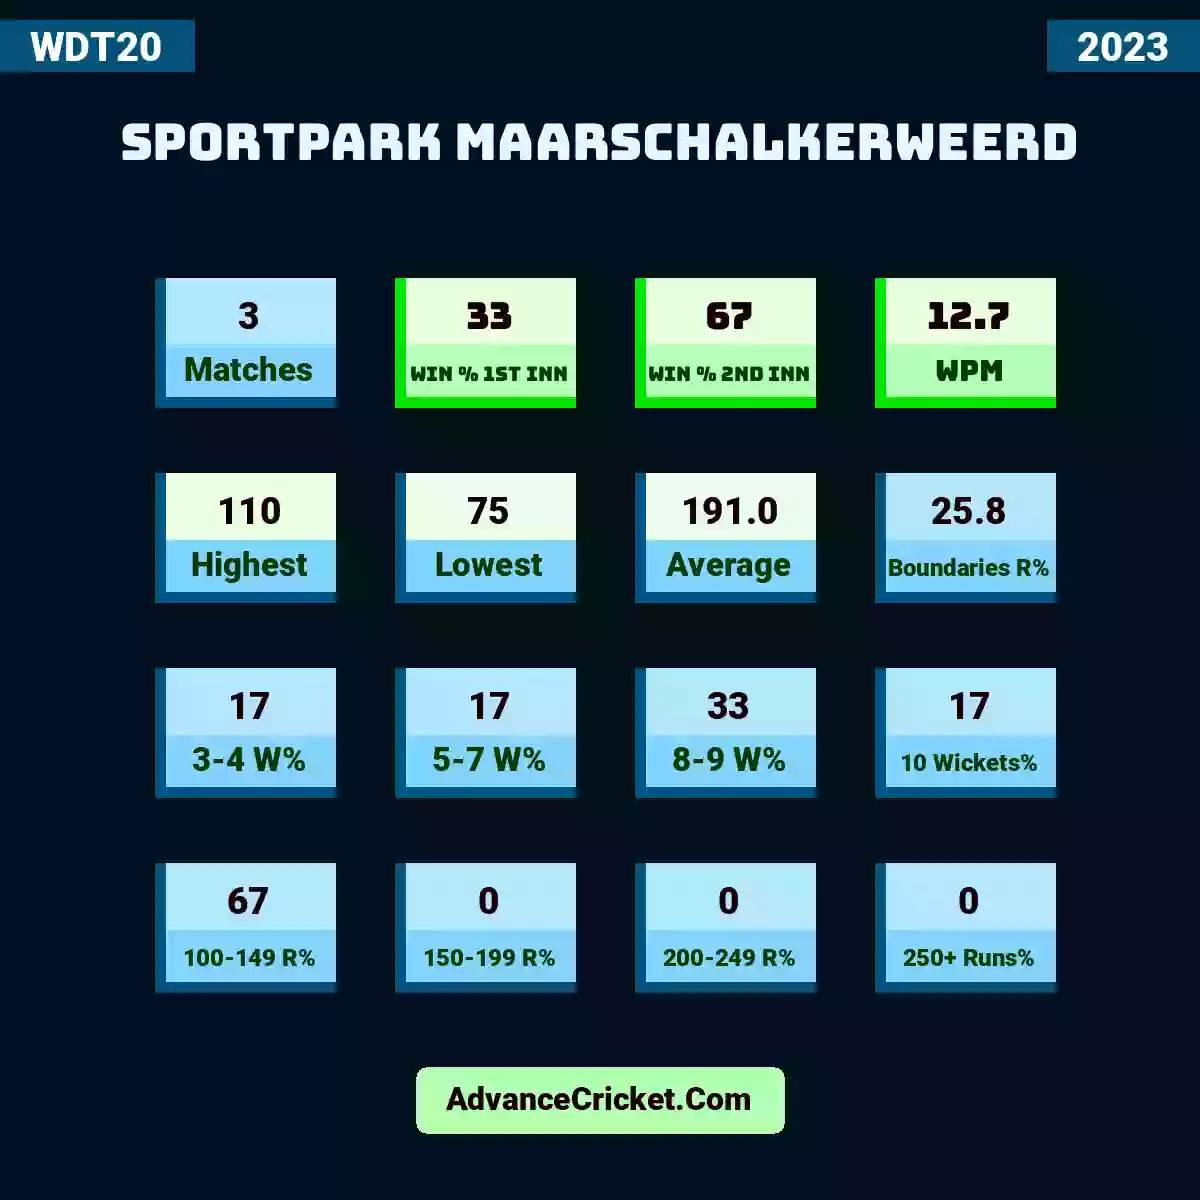 Image showing Sportpark Maarschalkerweerd with Matches: 3, Win % 1st Inn: 33, Win % 2nd Inn: 67, WPM: 12.7, Highest: 110, Lowest: 75, Average: 191.0, Boundaries R%: 25.8, 3-4 W%: 17, 5-7 W%: 17, 8-9 W%: 33, 10 Wickets%: 17, 100-149 R%: 67, 150-199 R%: 0, 200-249 R%: 0, 250+ Runs%: 0.